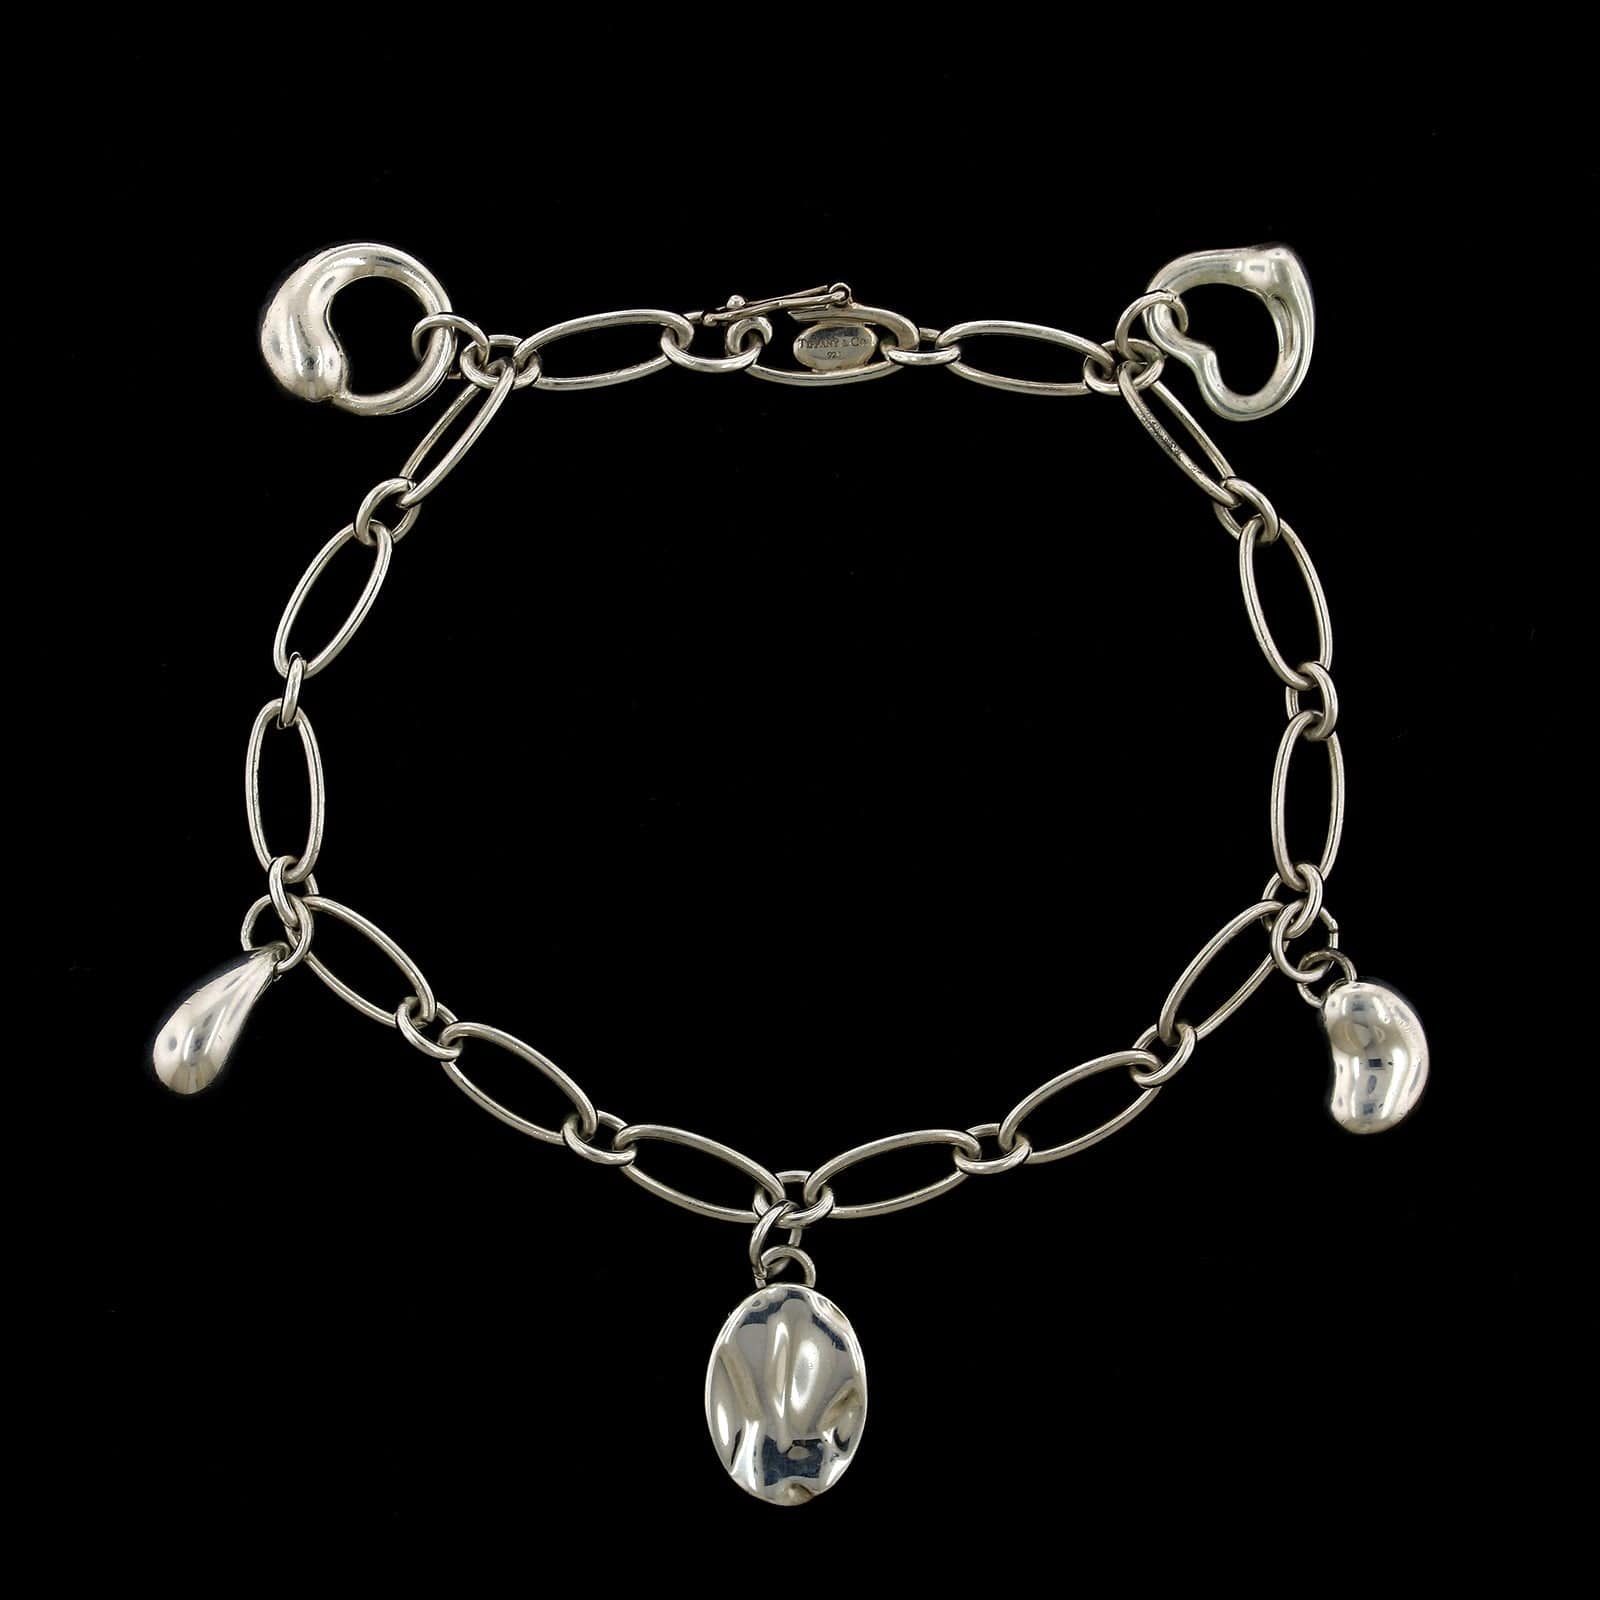 Tiffany & Co. Heart Tag & Shopping Bag Charm Bracelet - Sterling